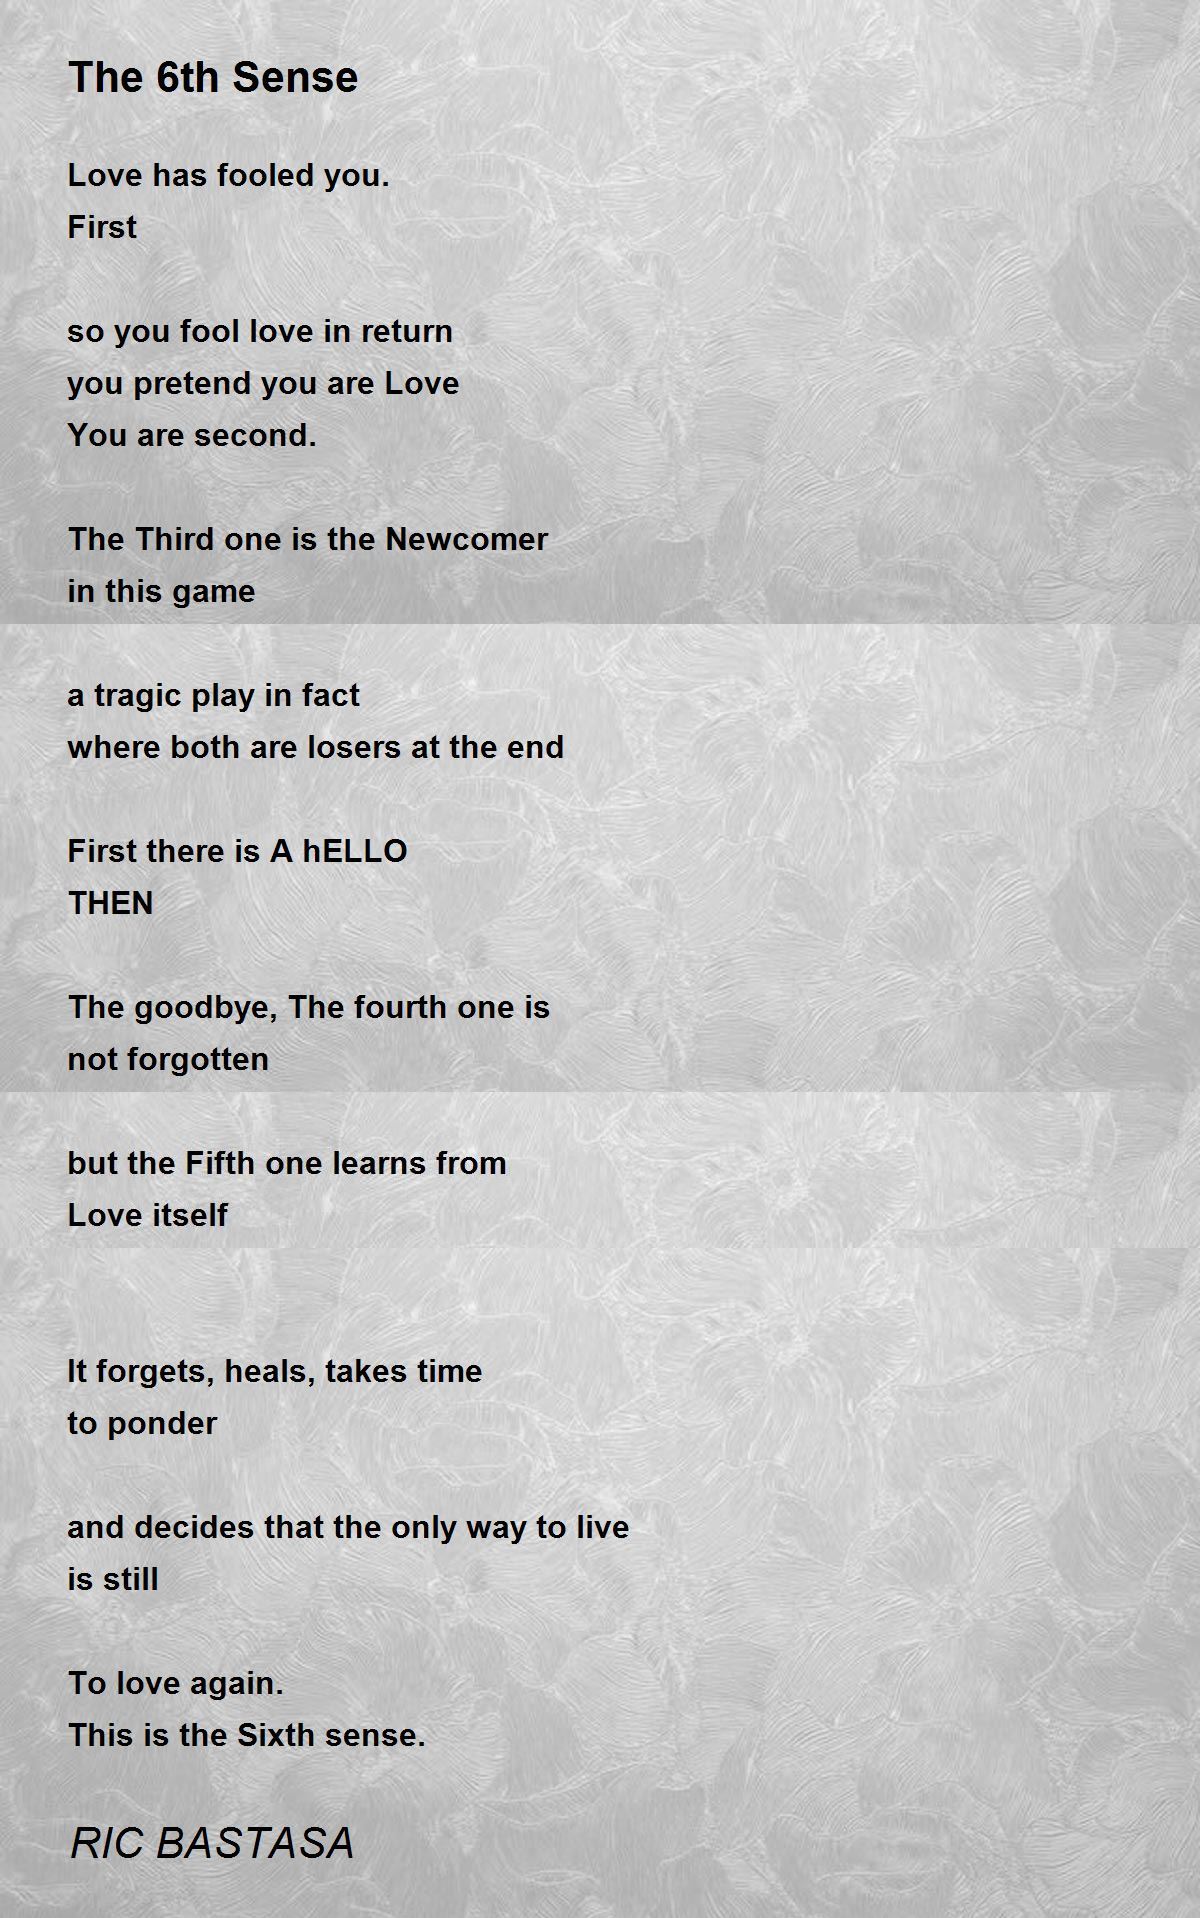 The 6th Sense - The 6th Sense Poem by RIC BASTASA